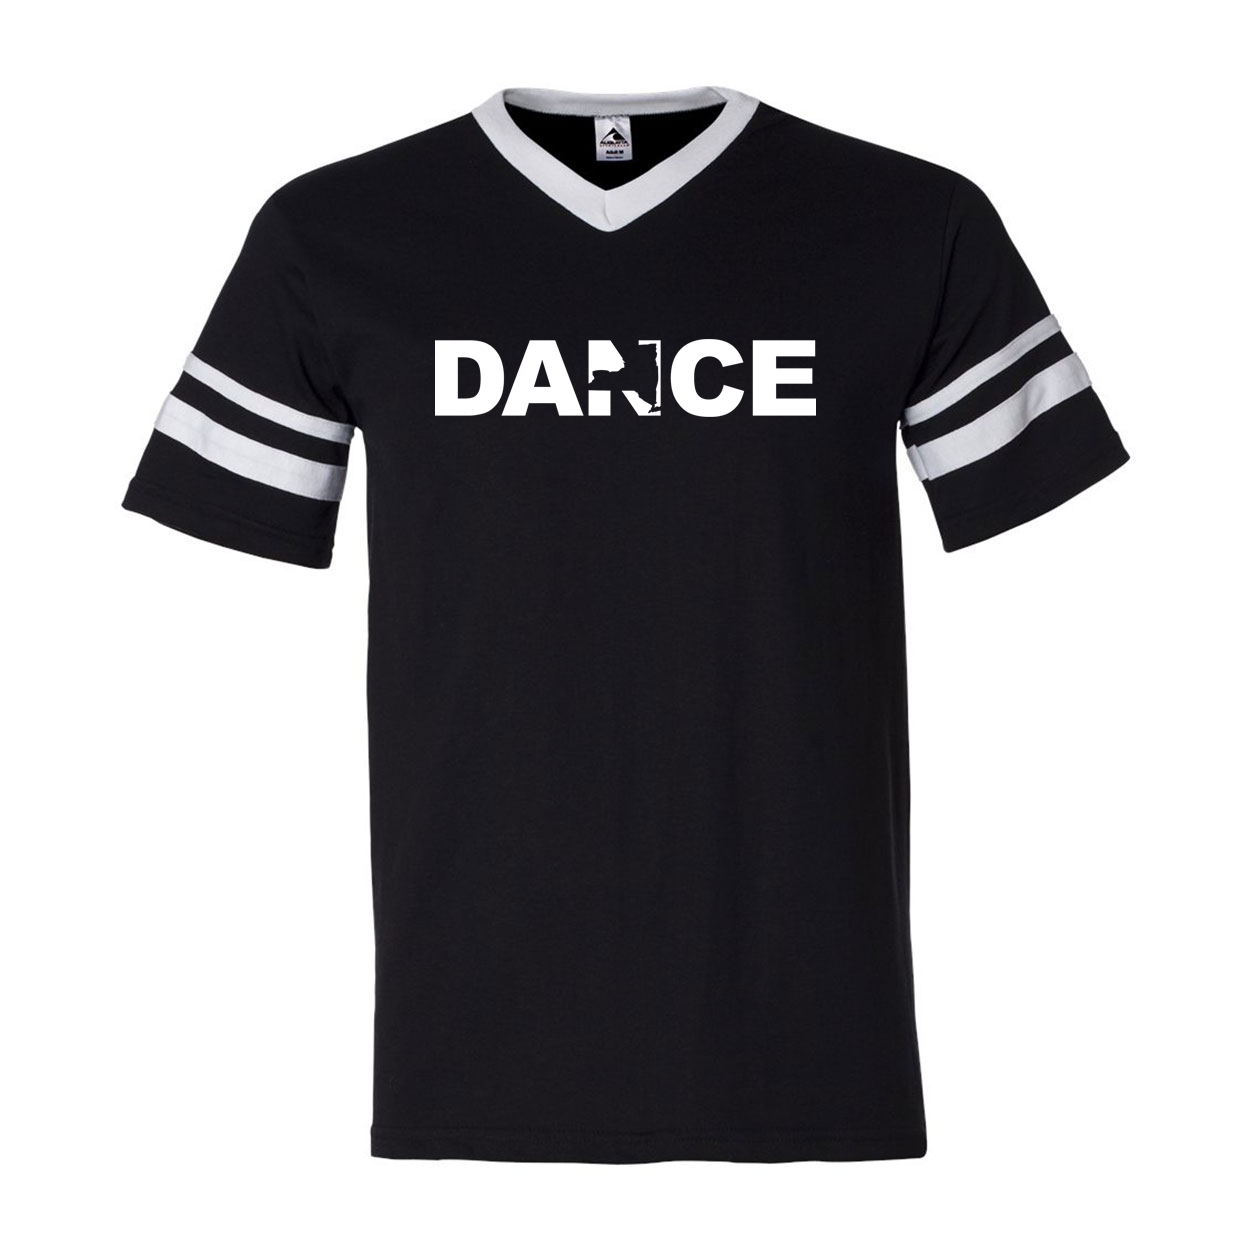 Dance New York Classic Premium Striped Jersey T-Shirt Black/White (White Logo)